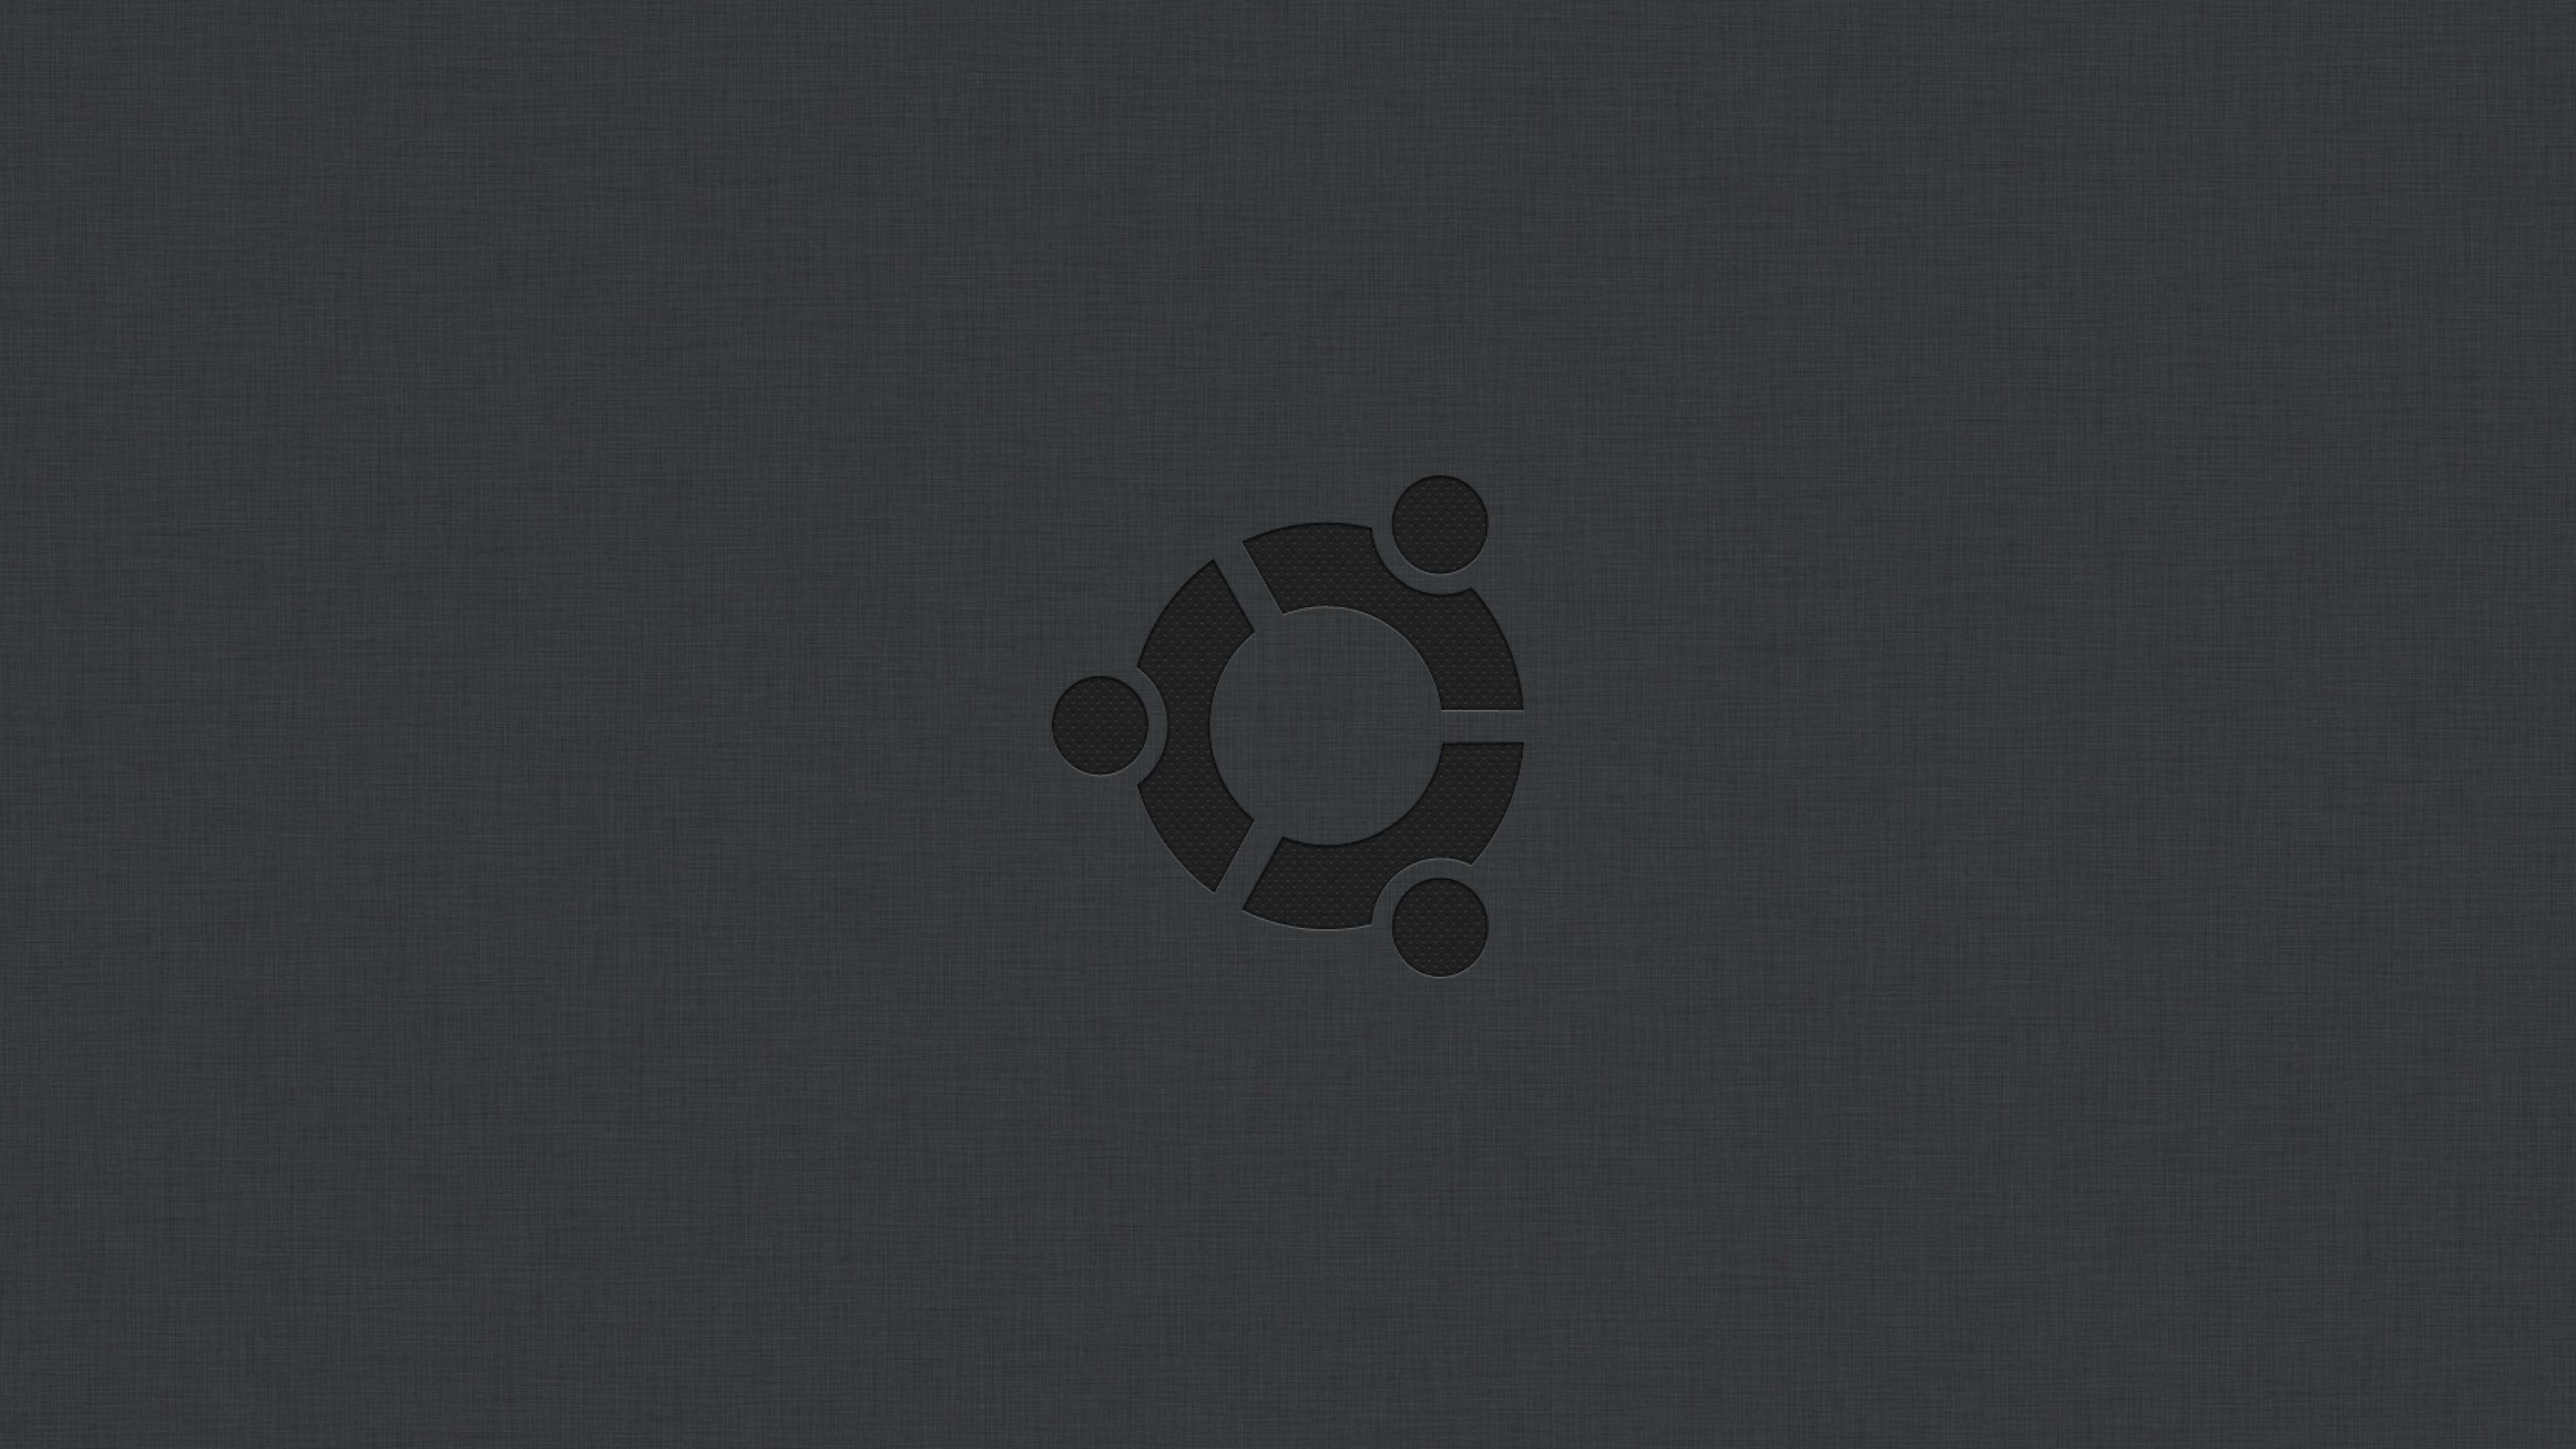 Ubuntu Wallpaper 4k Ultra HD